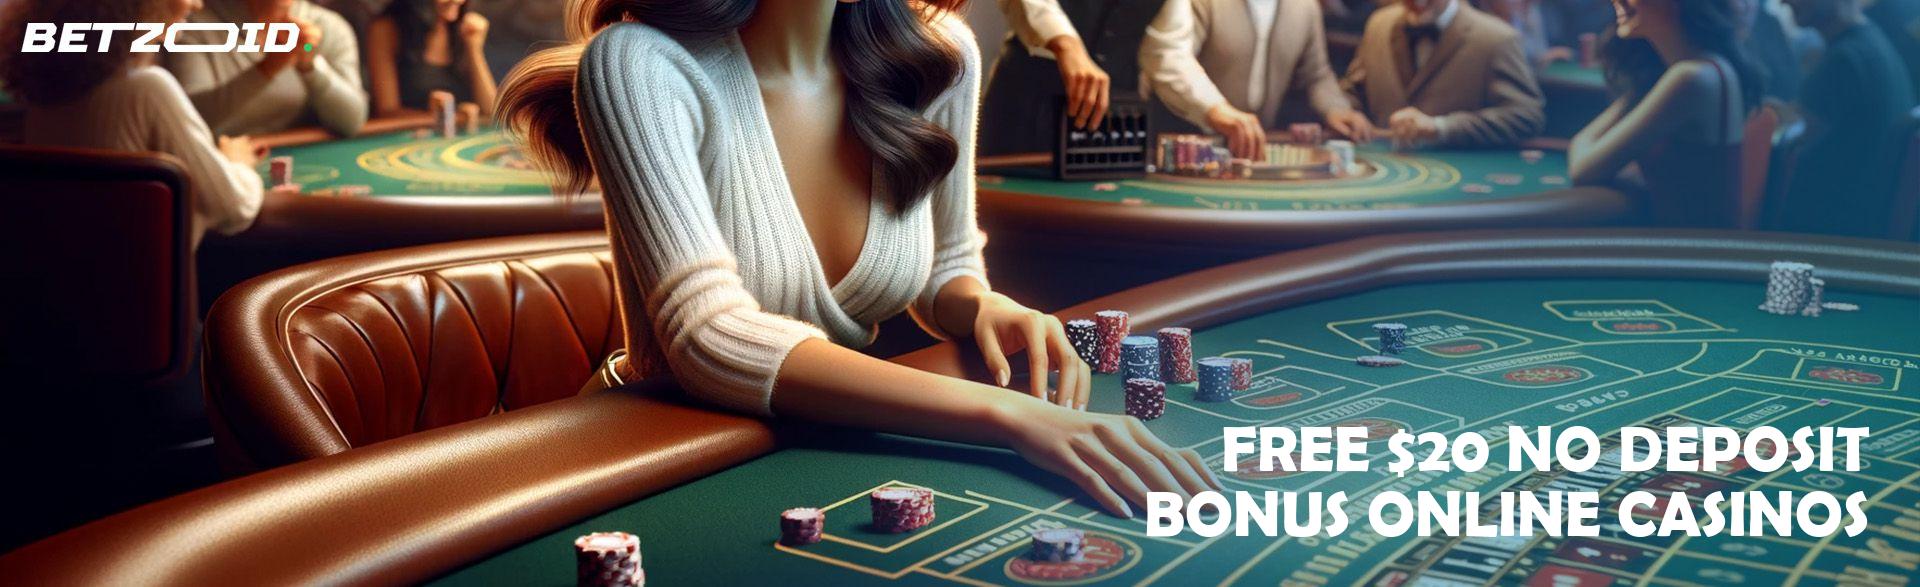 Free $20 No Deposit Bonus Online Casinos.